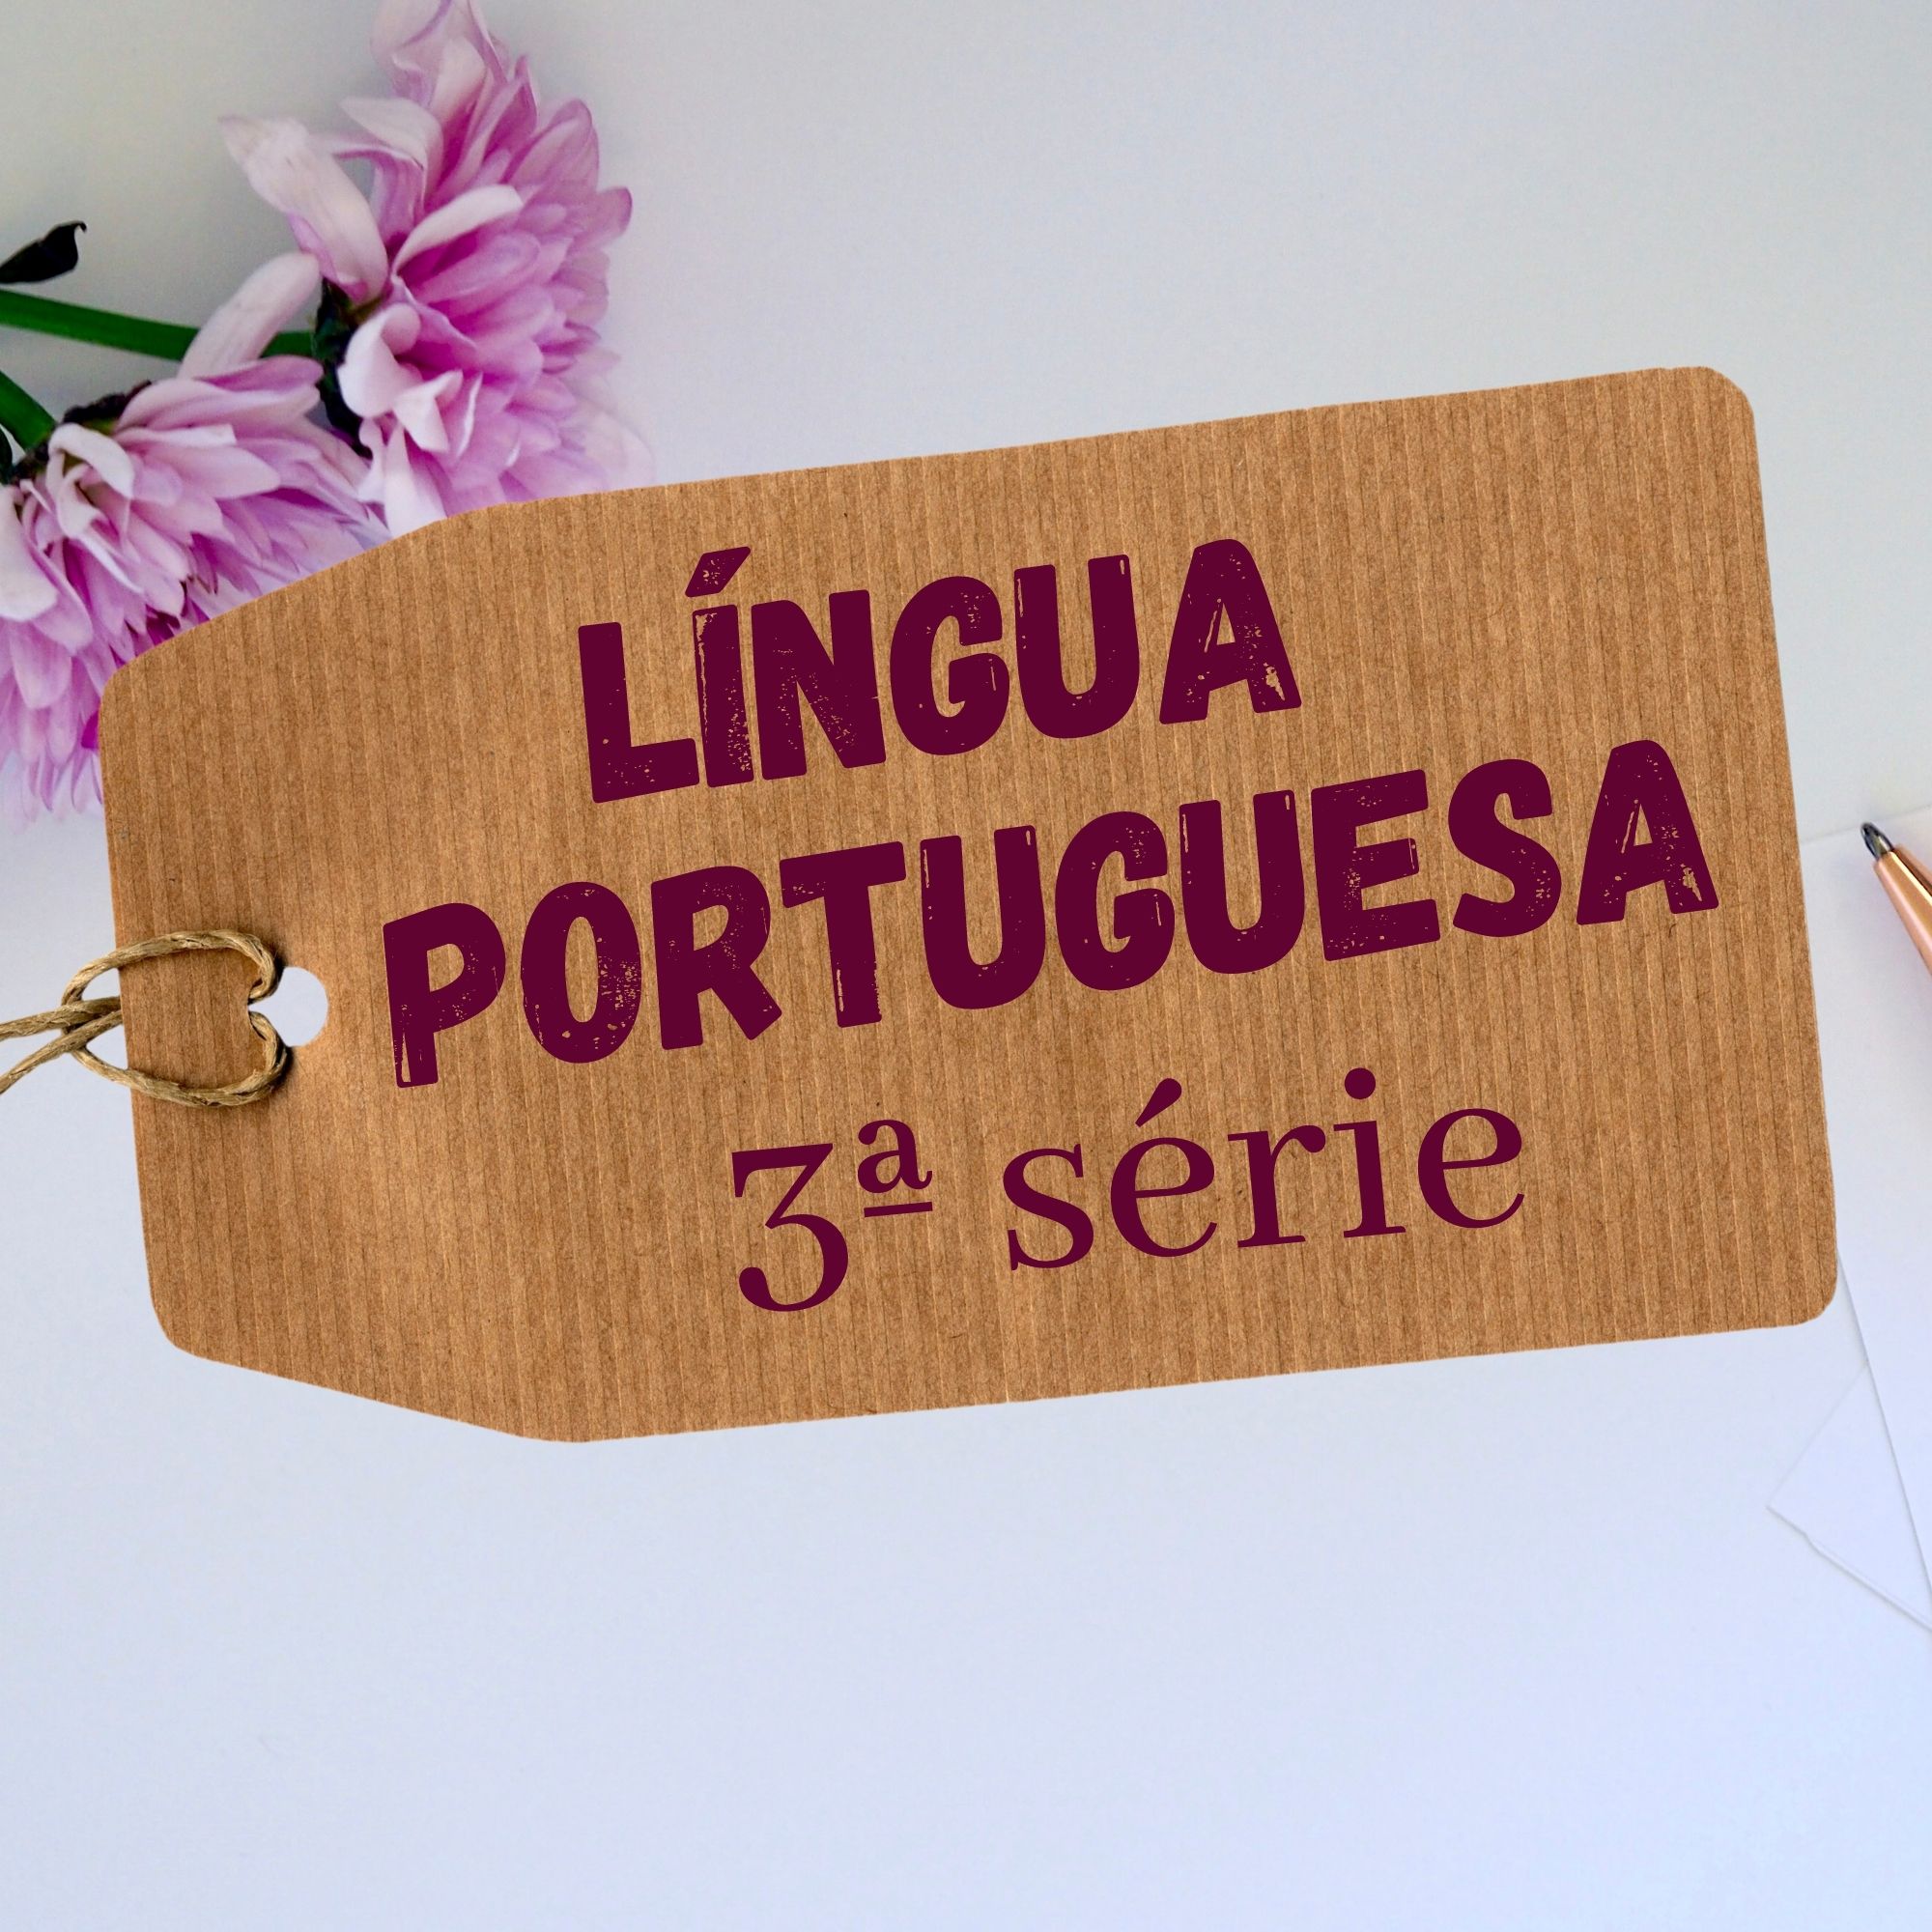 You are currently viewing Propostas didáticas – Língua Portuguesa – EJA – 3ª série